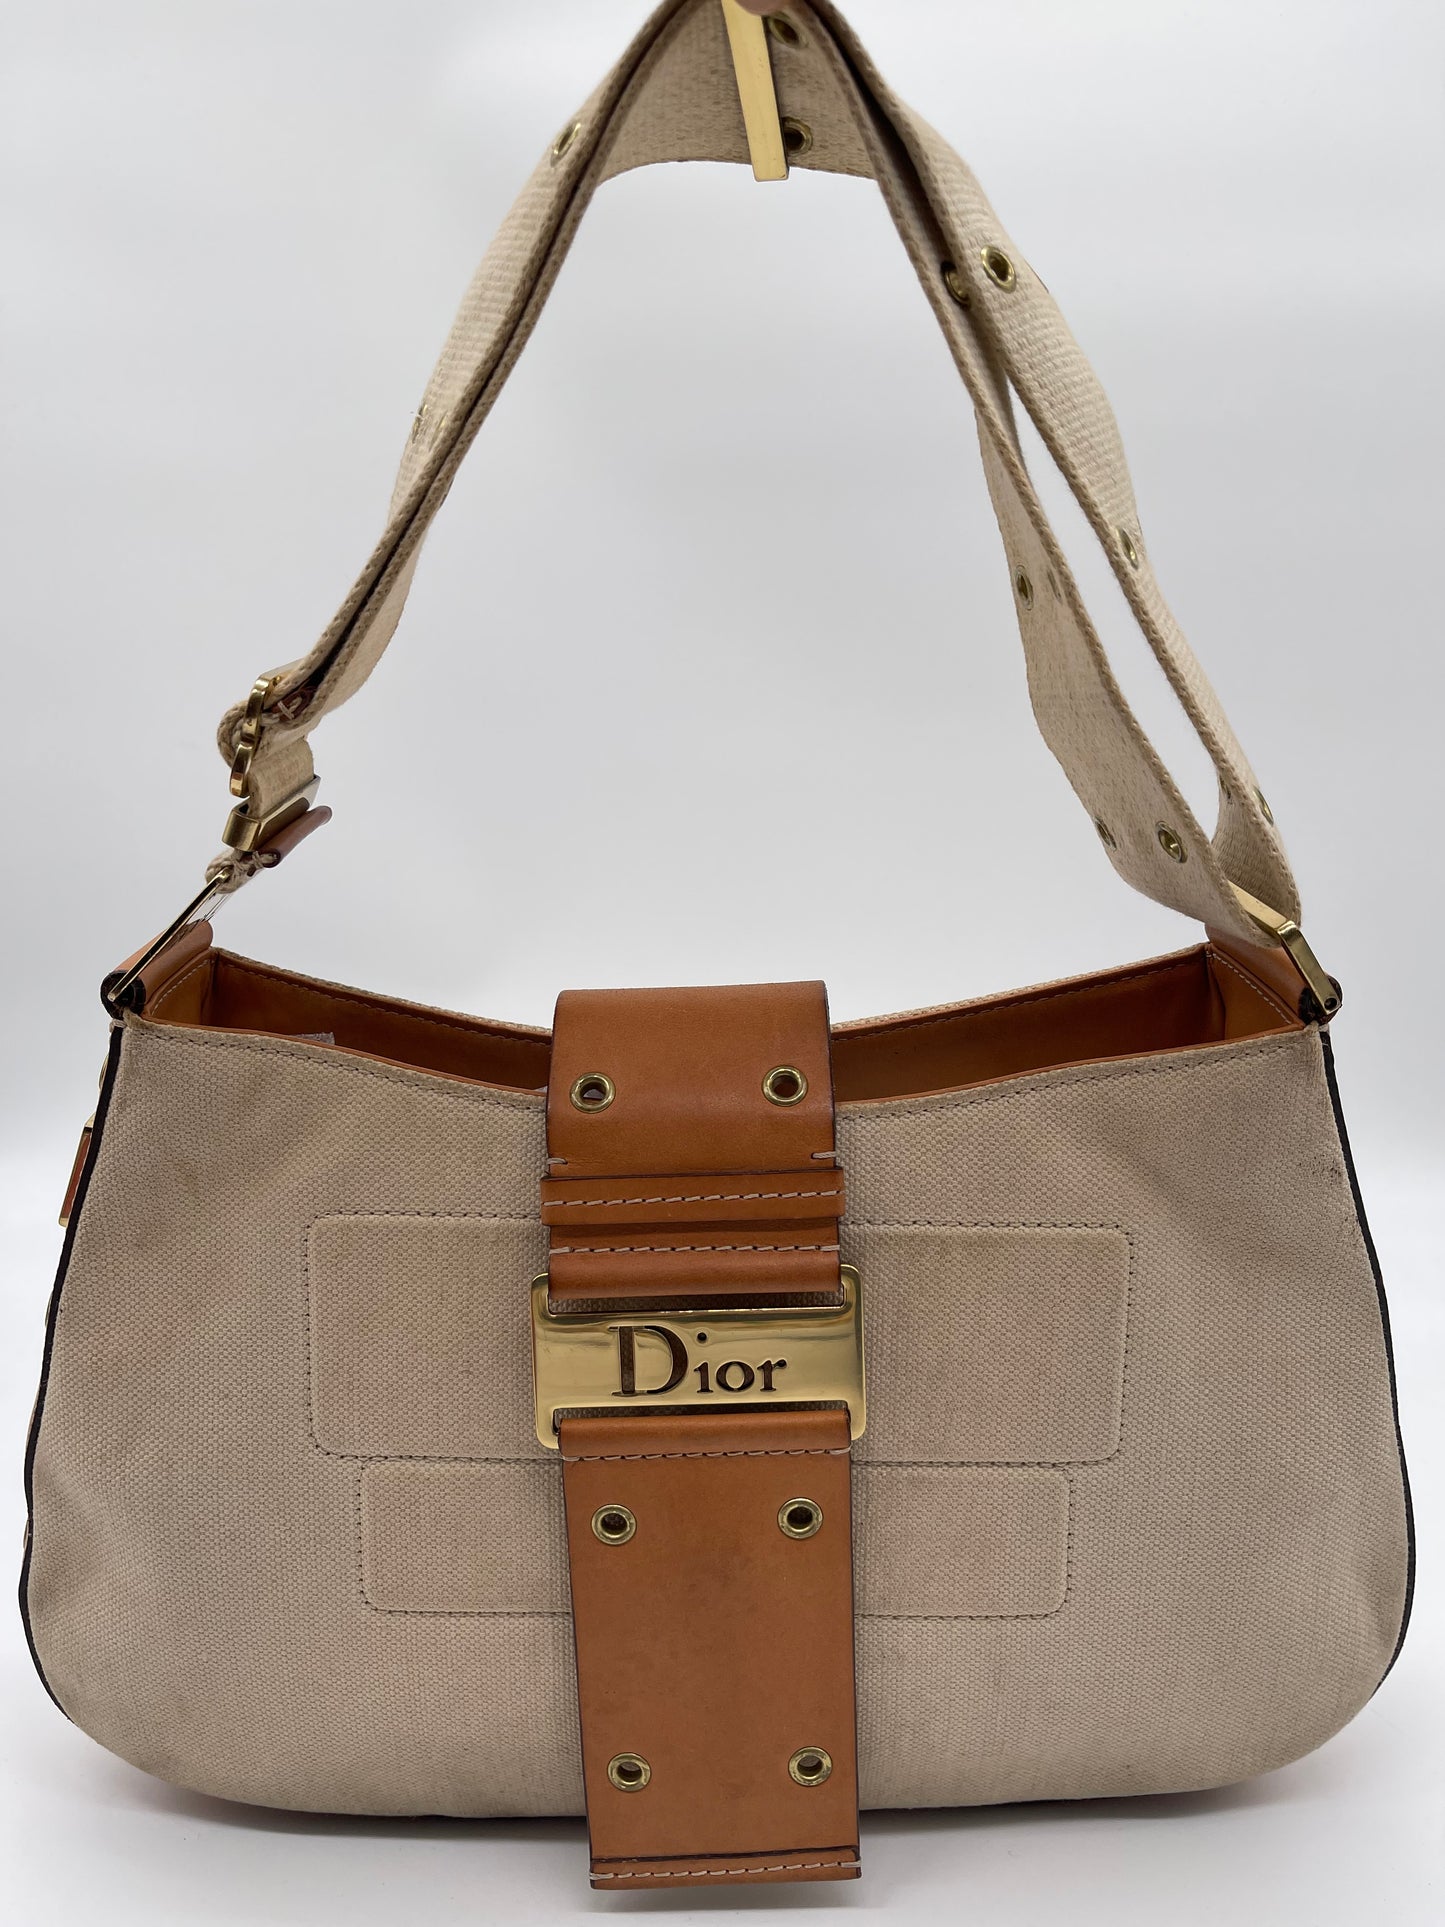 Dior Columbus shoulder bag